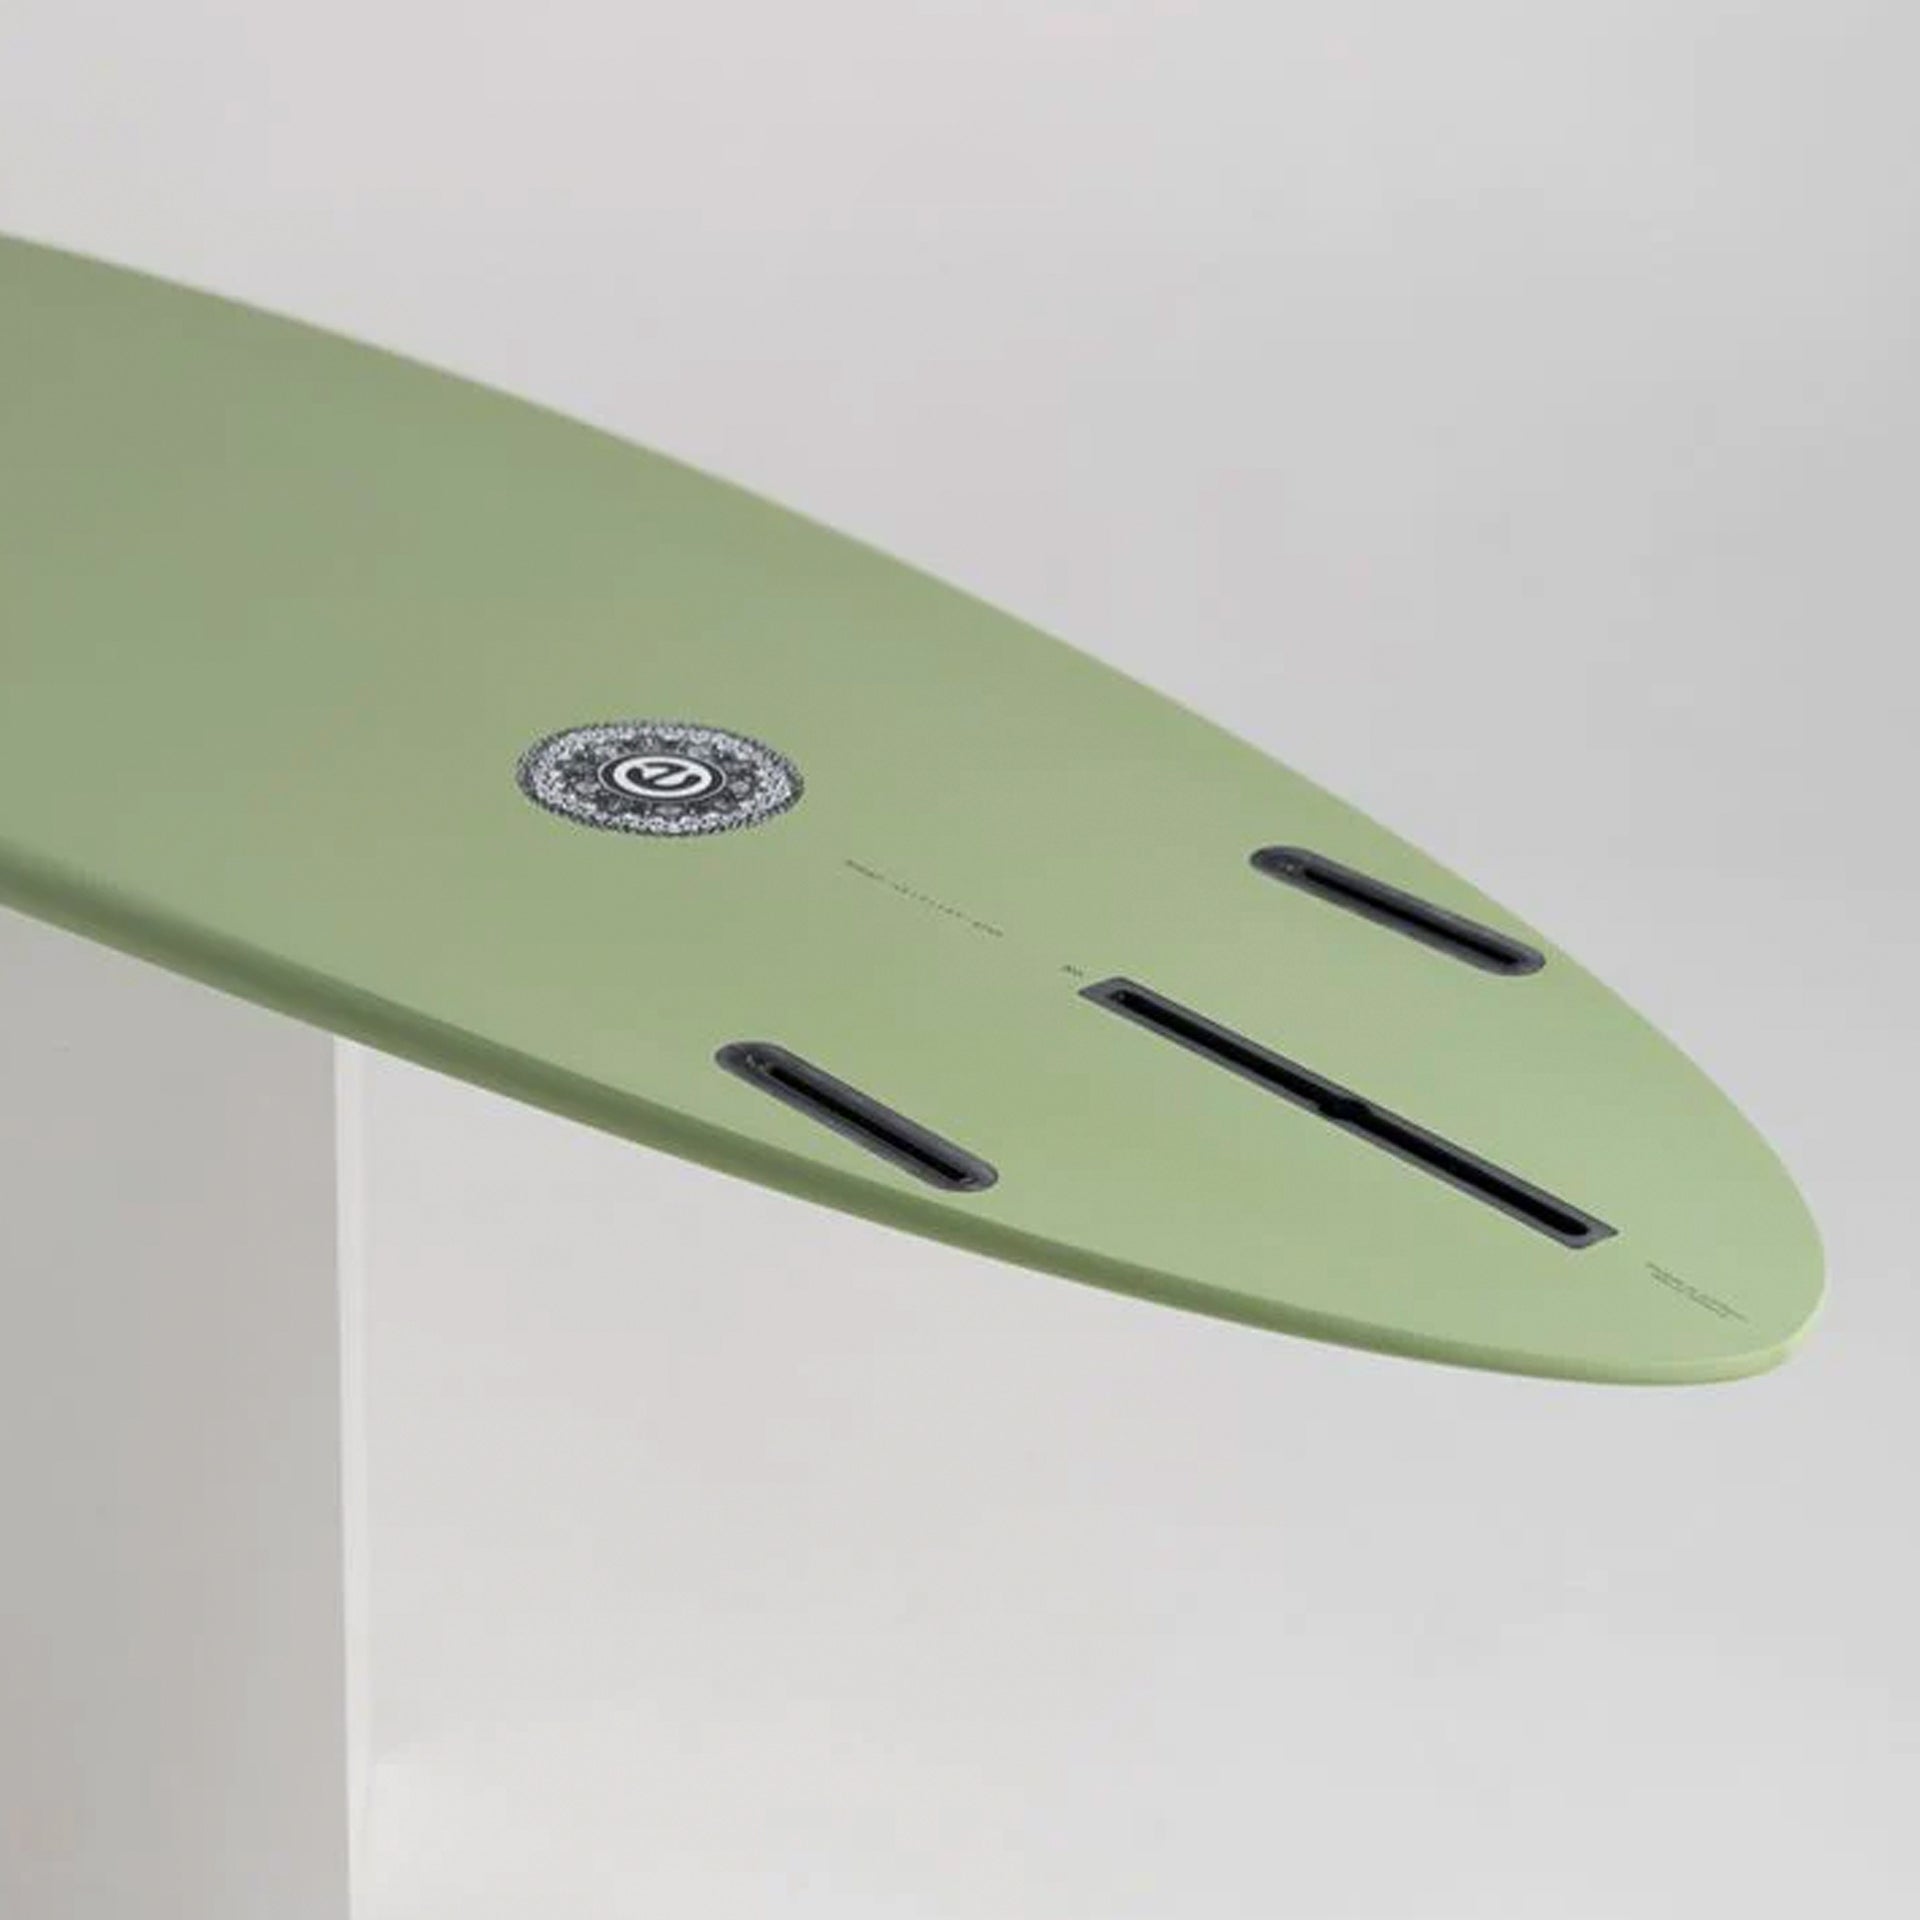 Elemnt Midlength Surfboard 1CF+2F Future - Smoke Green - ManGo Surfing